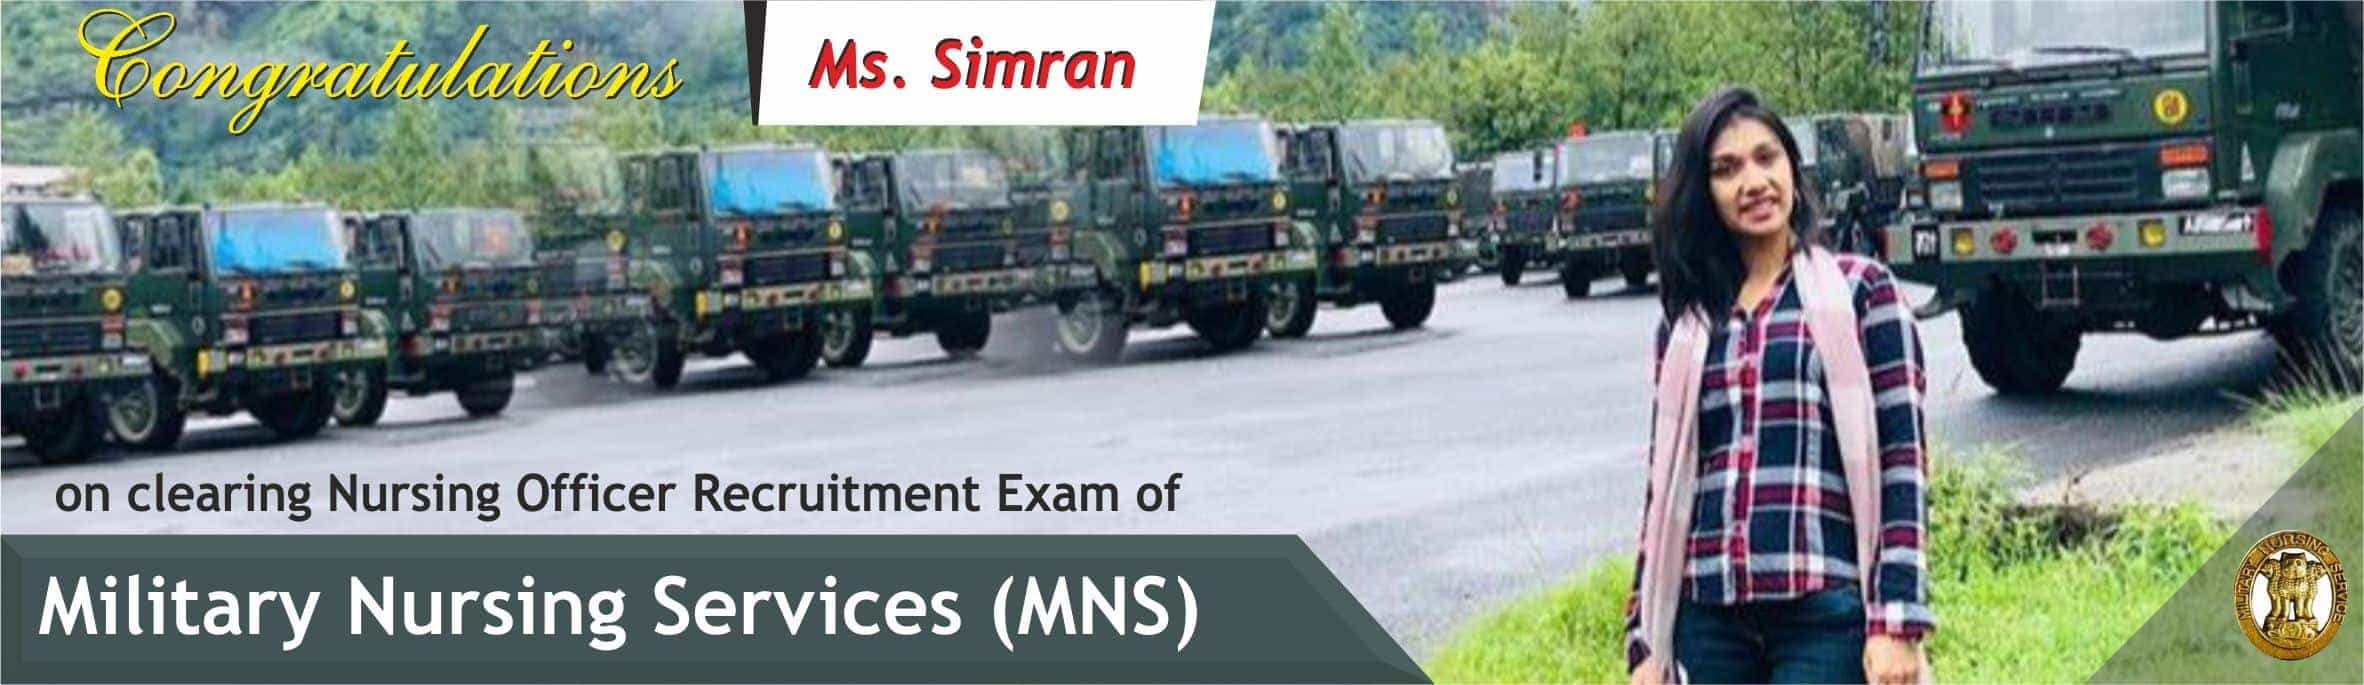 Clearing Nursing Officer Recruitment MNS simran